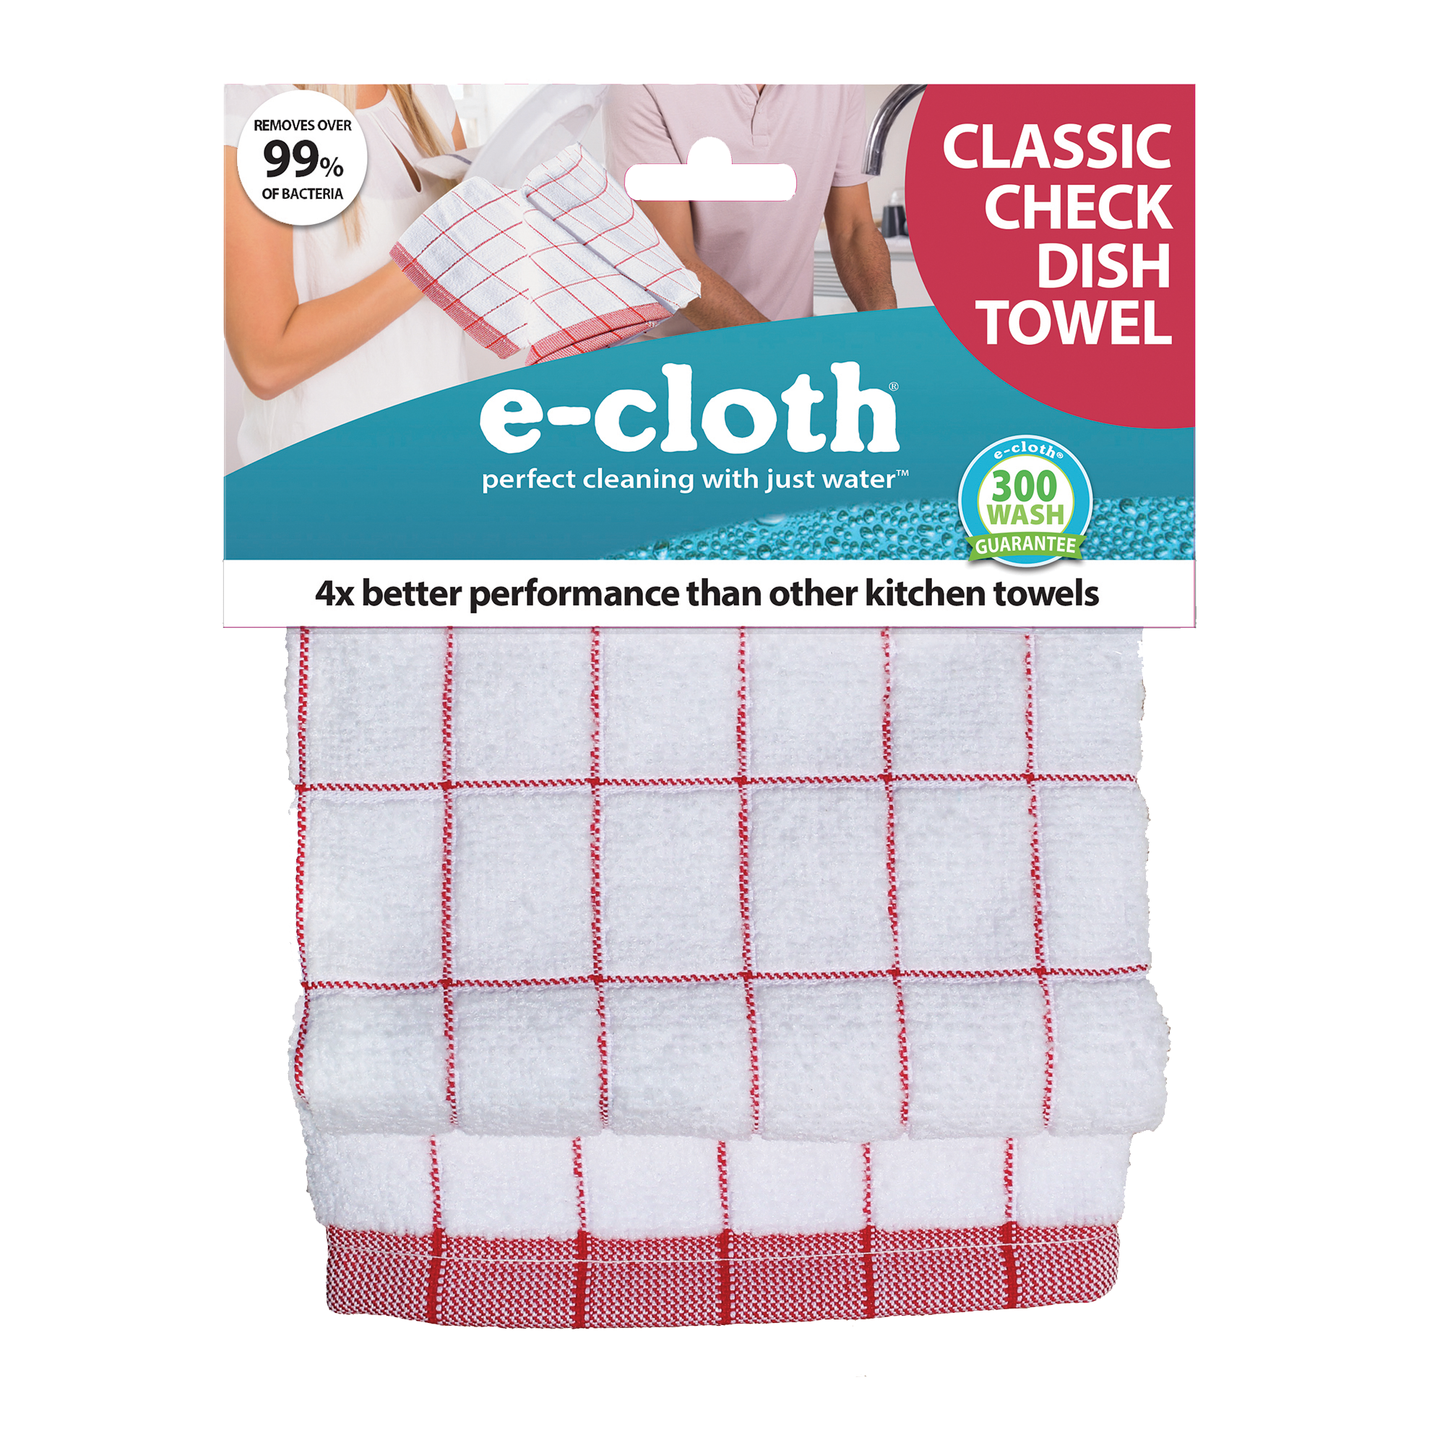 CLASSIC CHECK DISH TOWEL